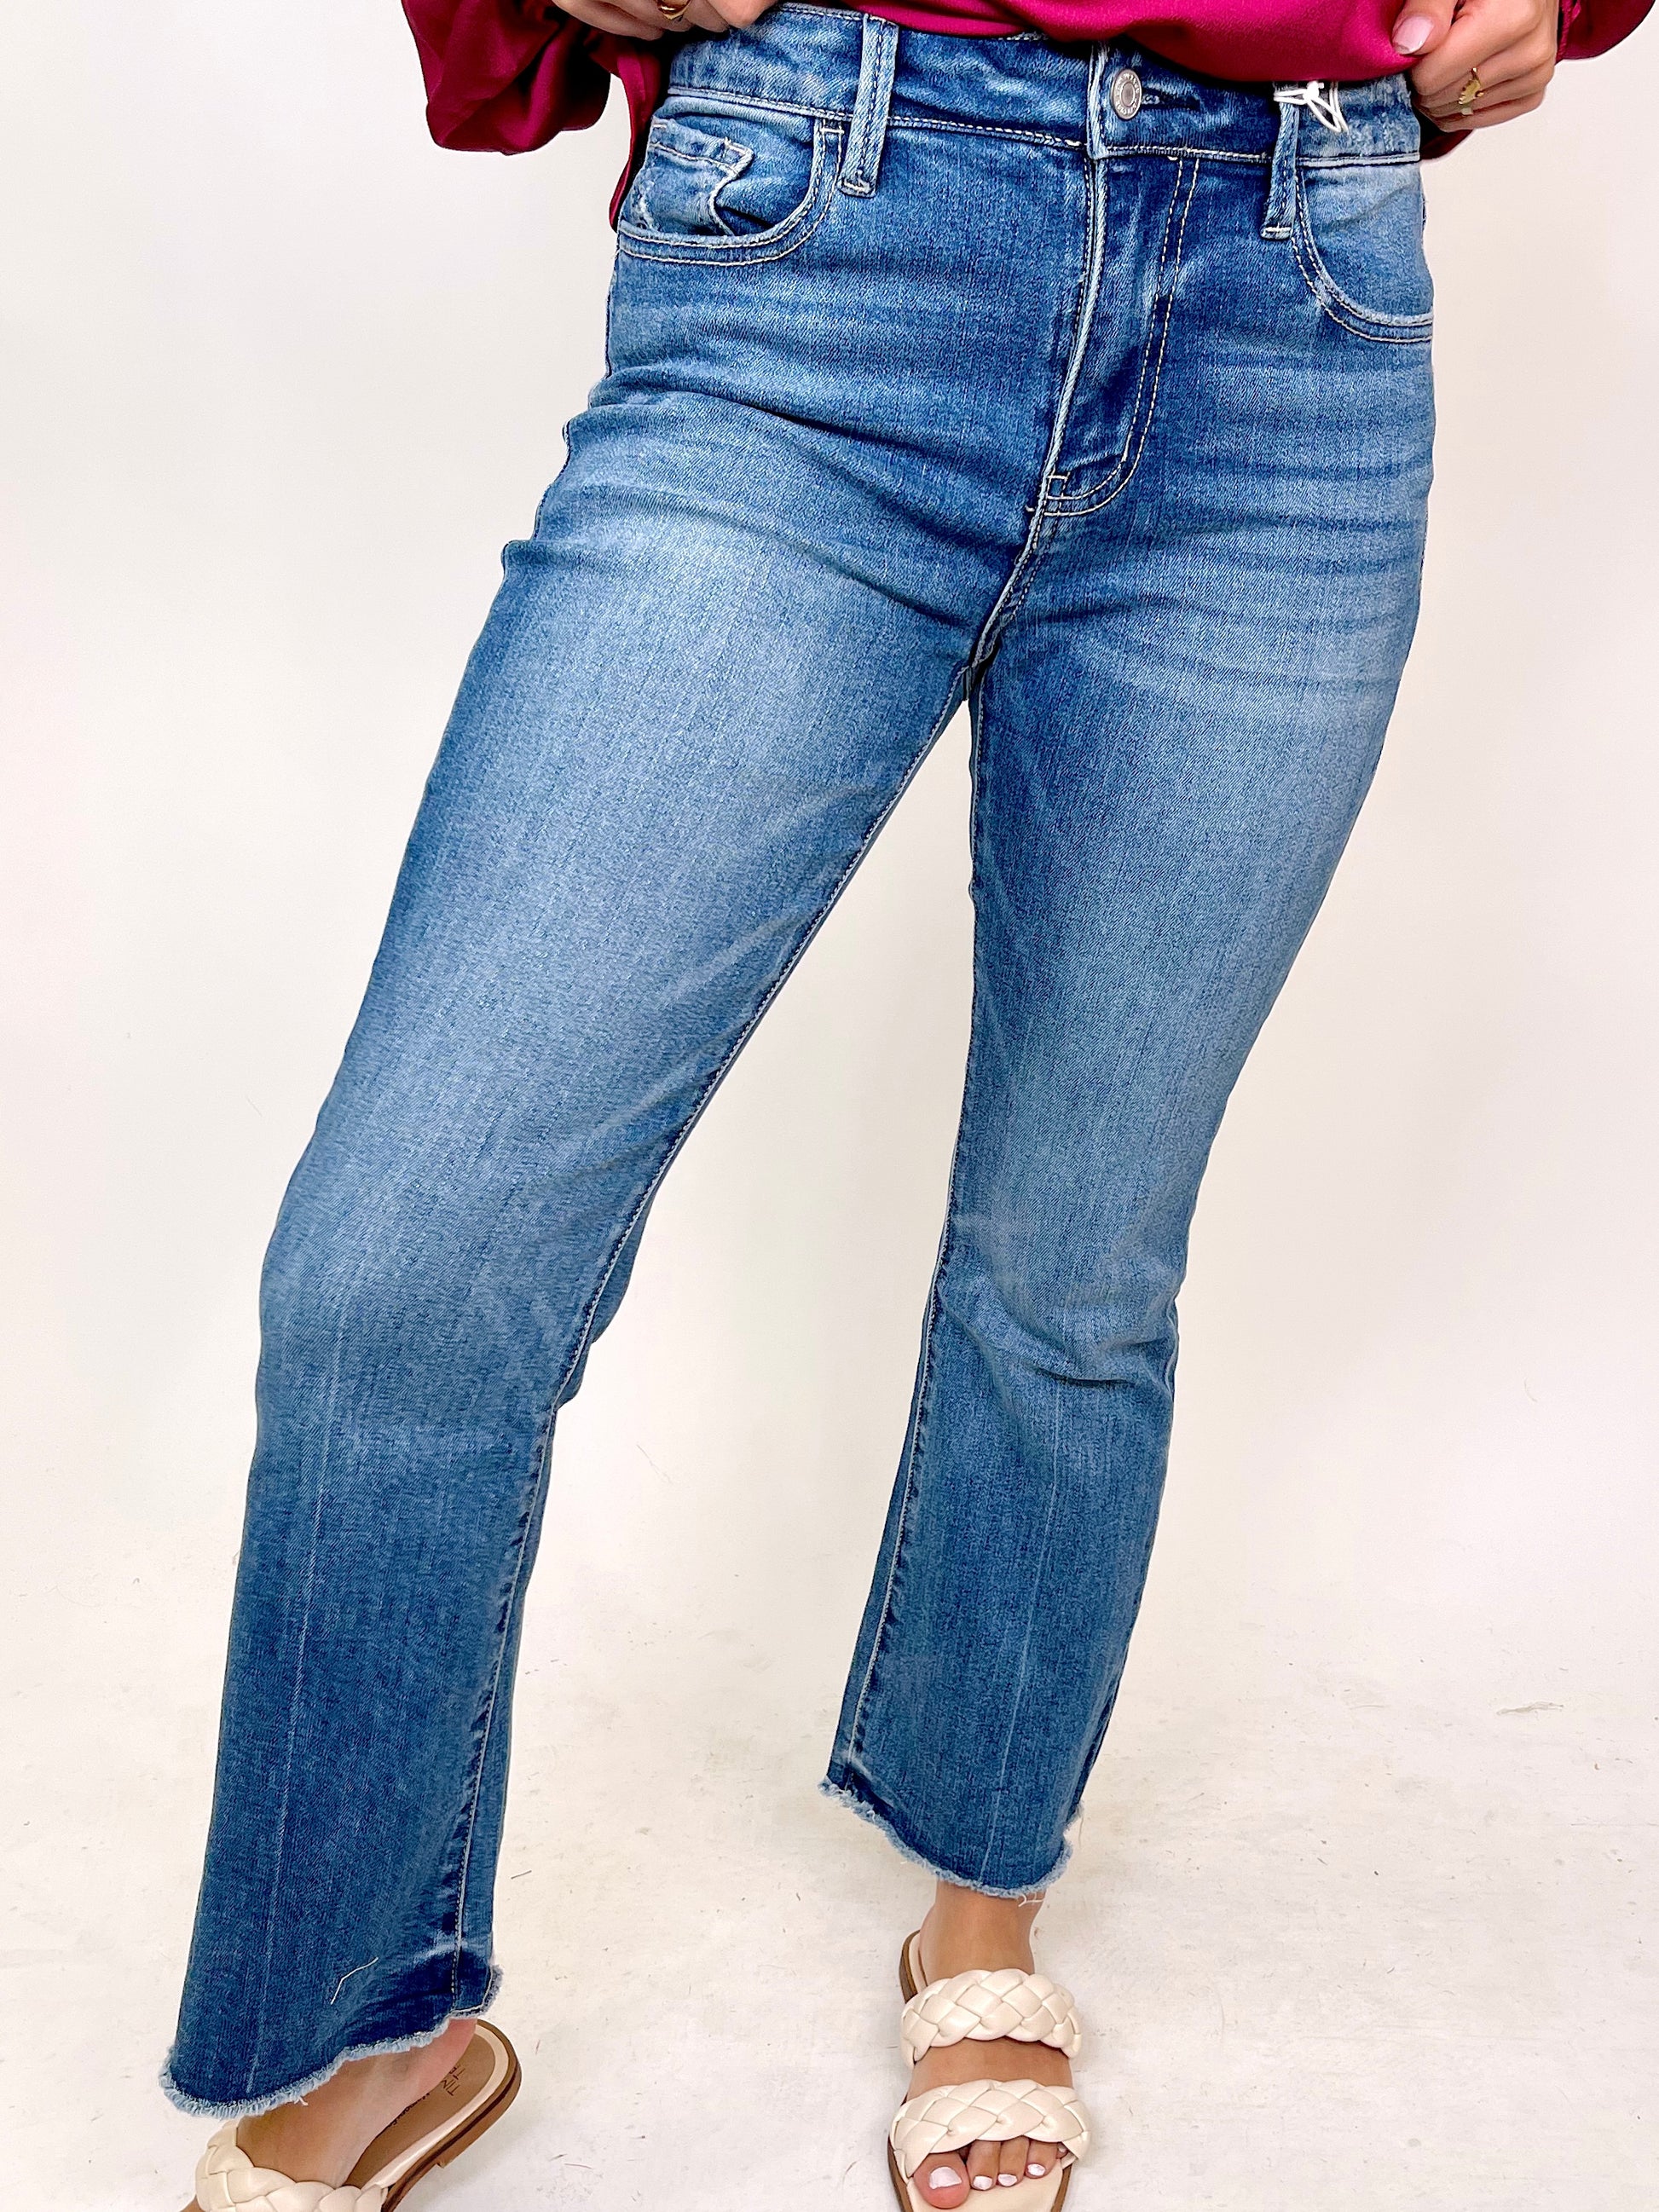 The Bridget Jeans-Jeans-Vervet-The Village Shoppe, Women’s Fashion Boutique, Shop Online and In Store - Located in Muscle Shoals, AL.